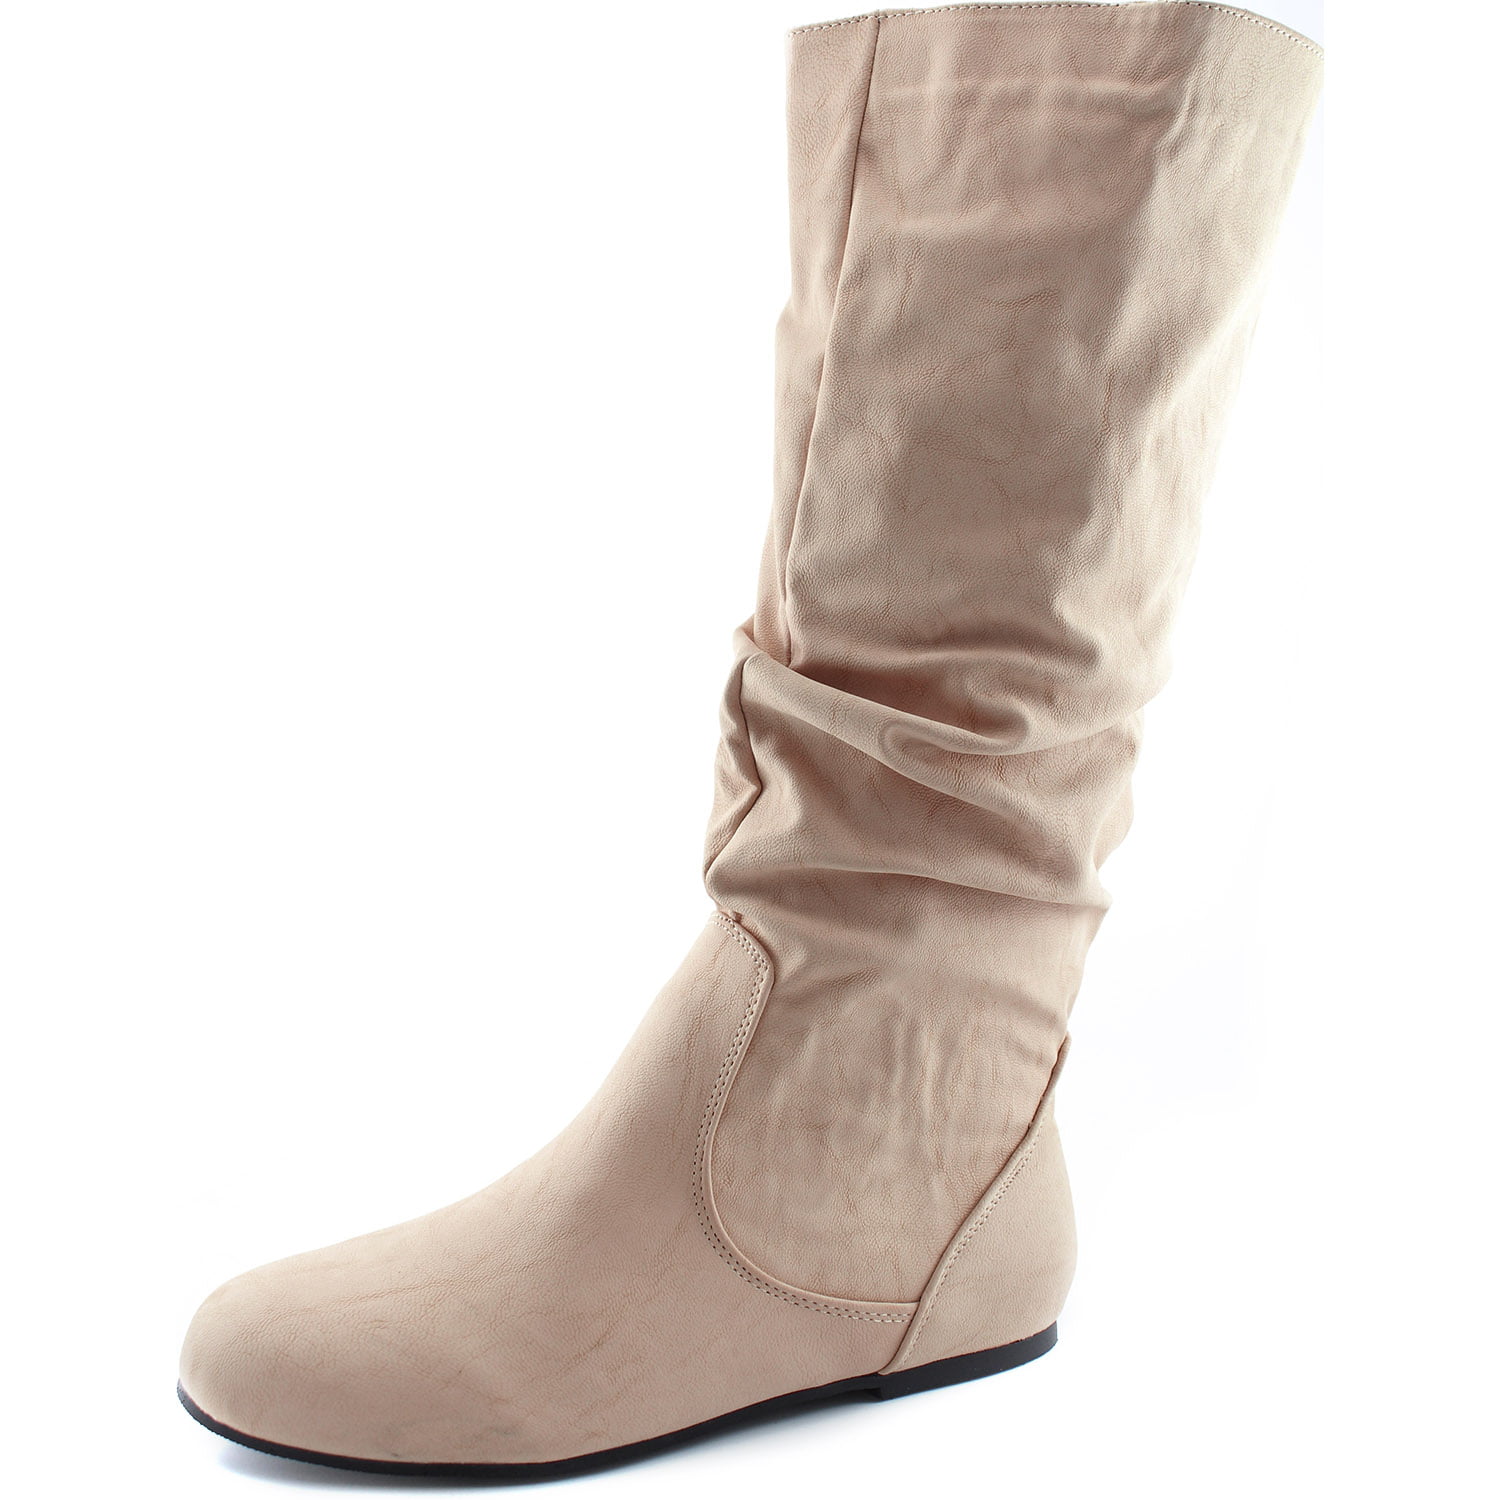 NEW Women's Winter Low Flat Heel Zipper Buckle Strap Mid-Calf Boots Size 5.5-10 